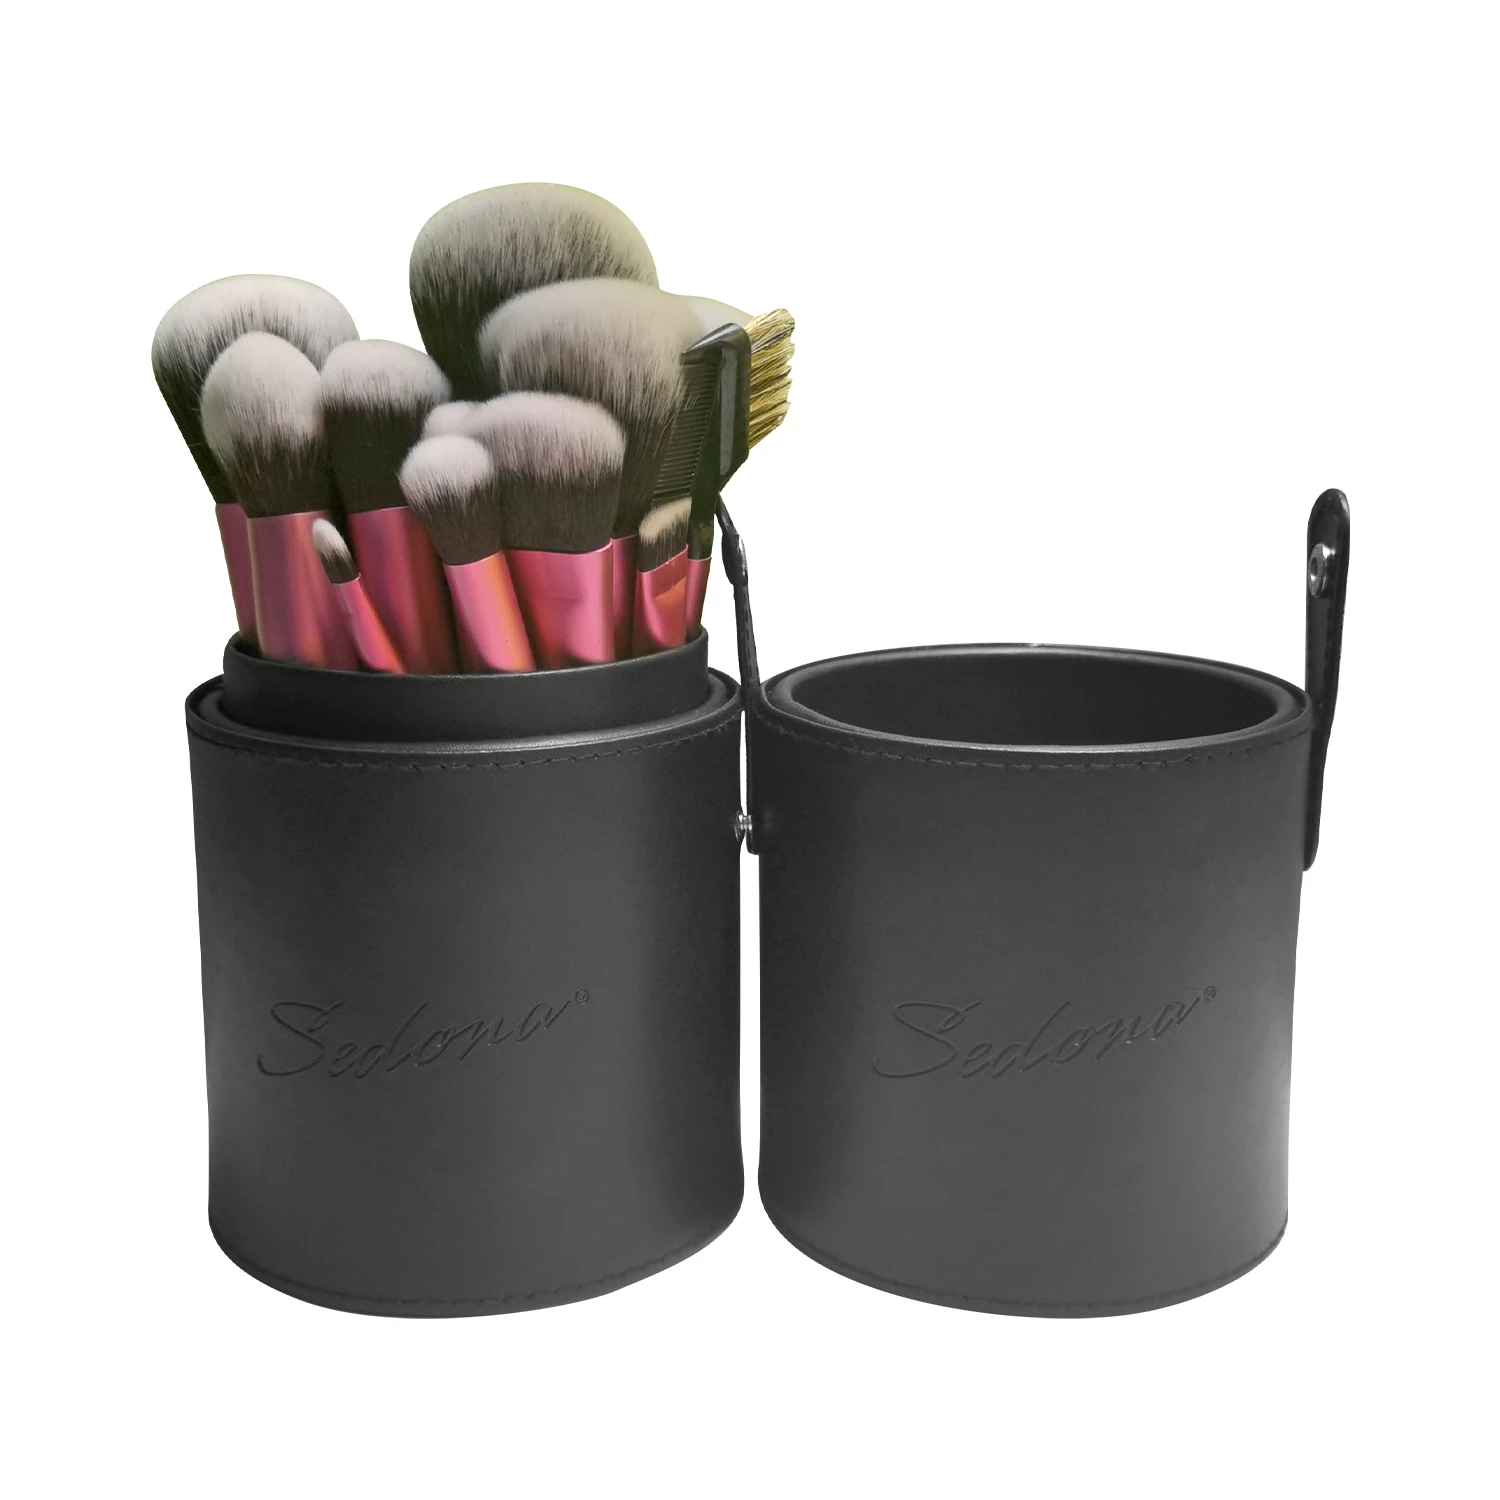 free-shipping-sedona-22pcs-professional-high-quality-makeup-brush-set-with-cylinder-case-handmade-teniques-taklonhair-brush-set